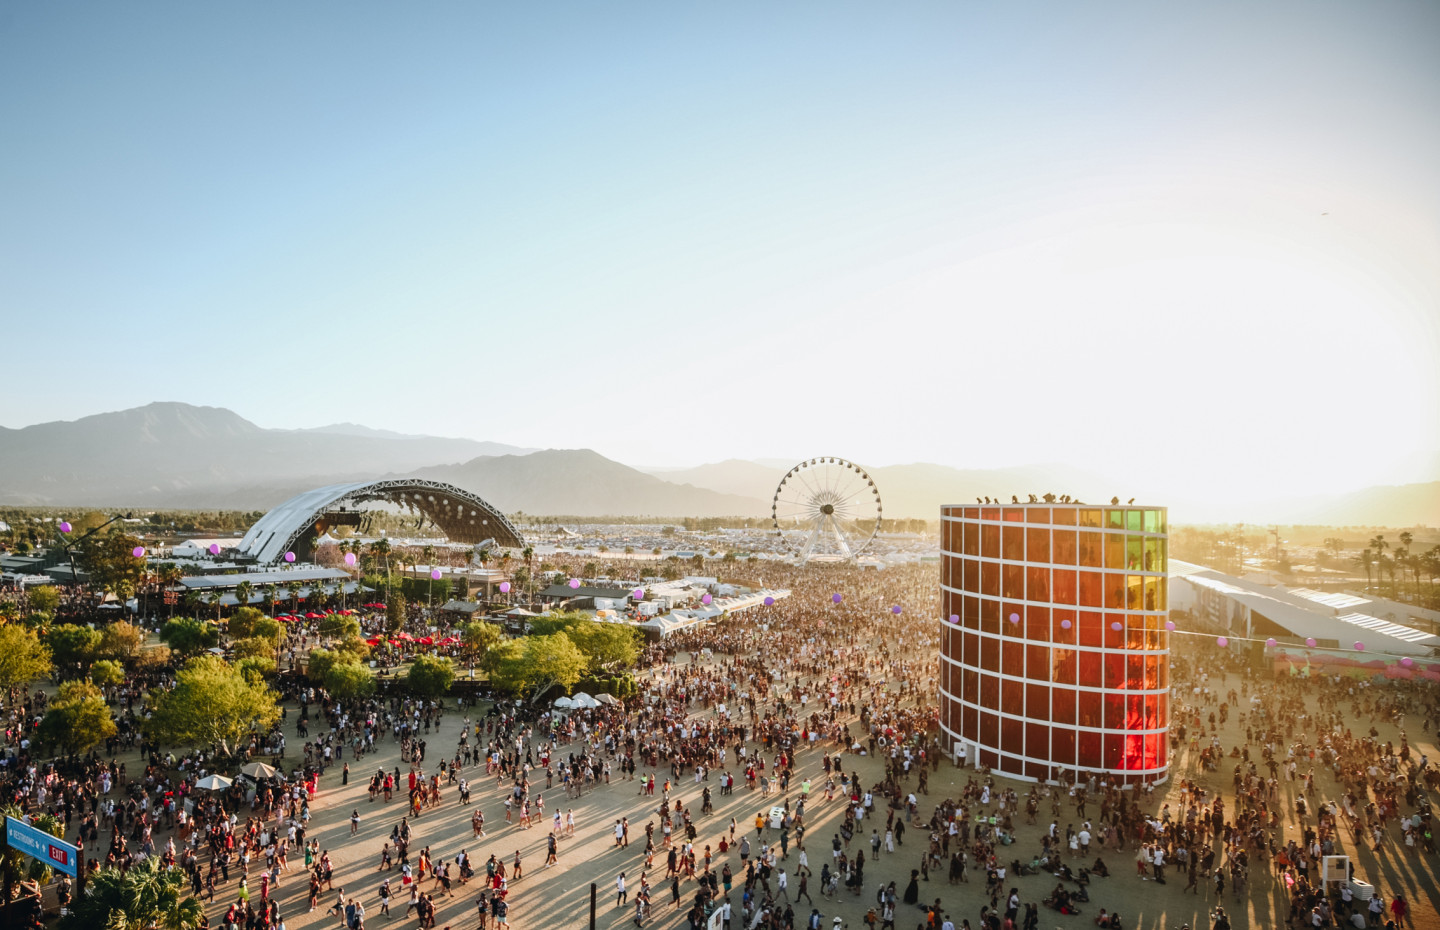 Coachella Pictures 2022